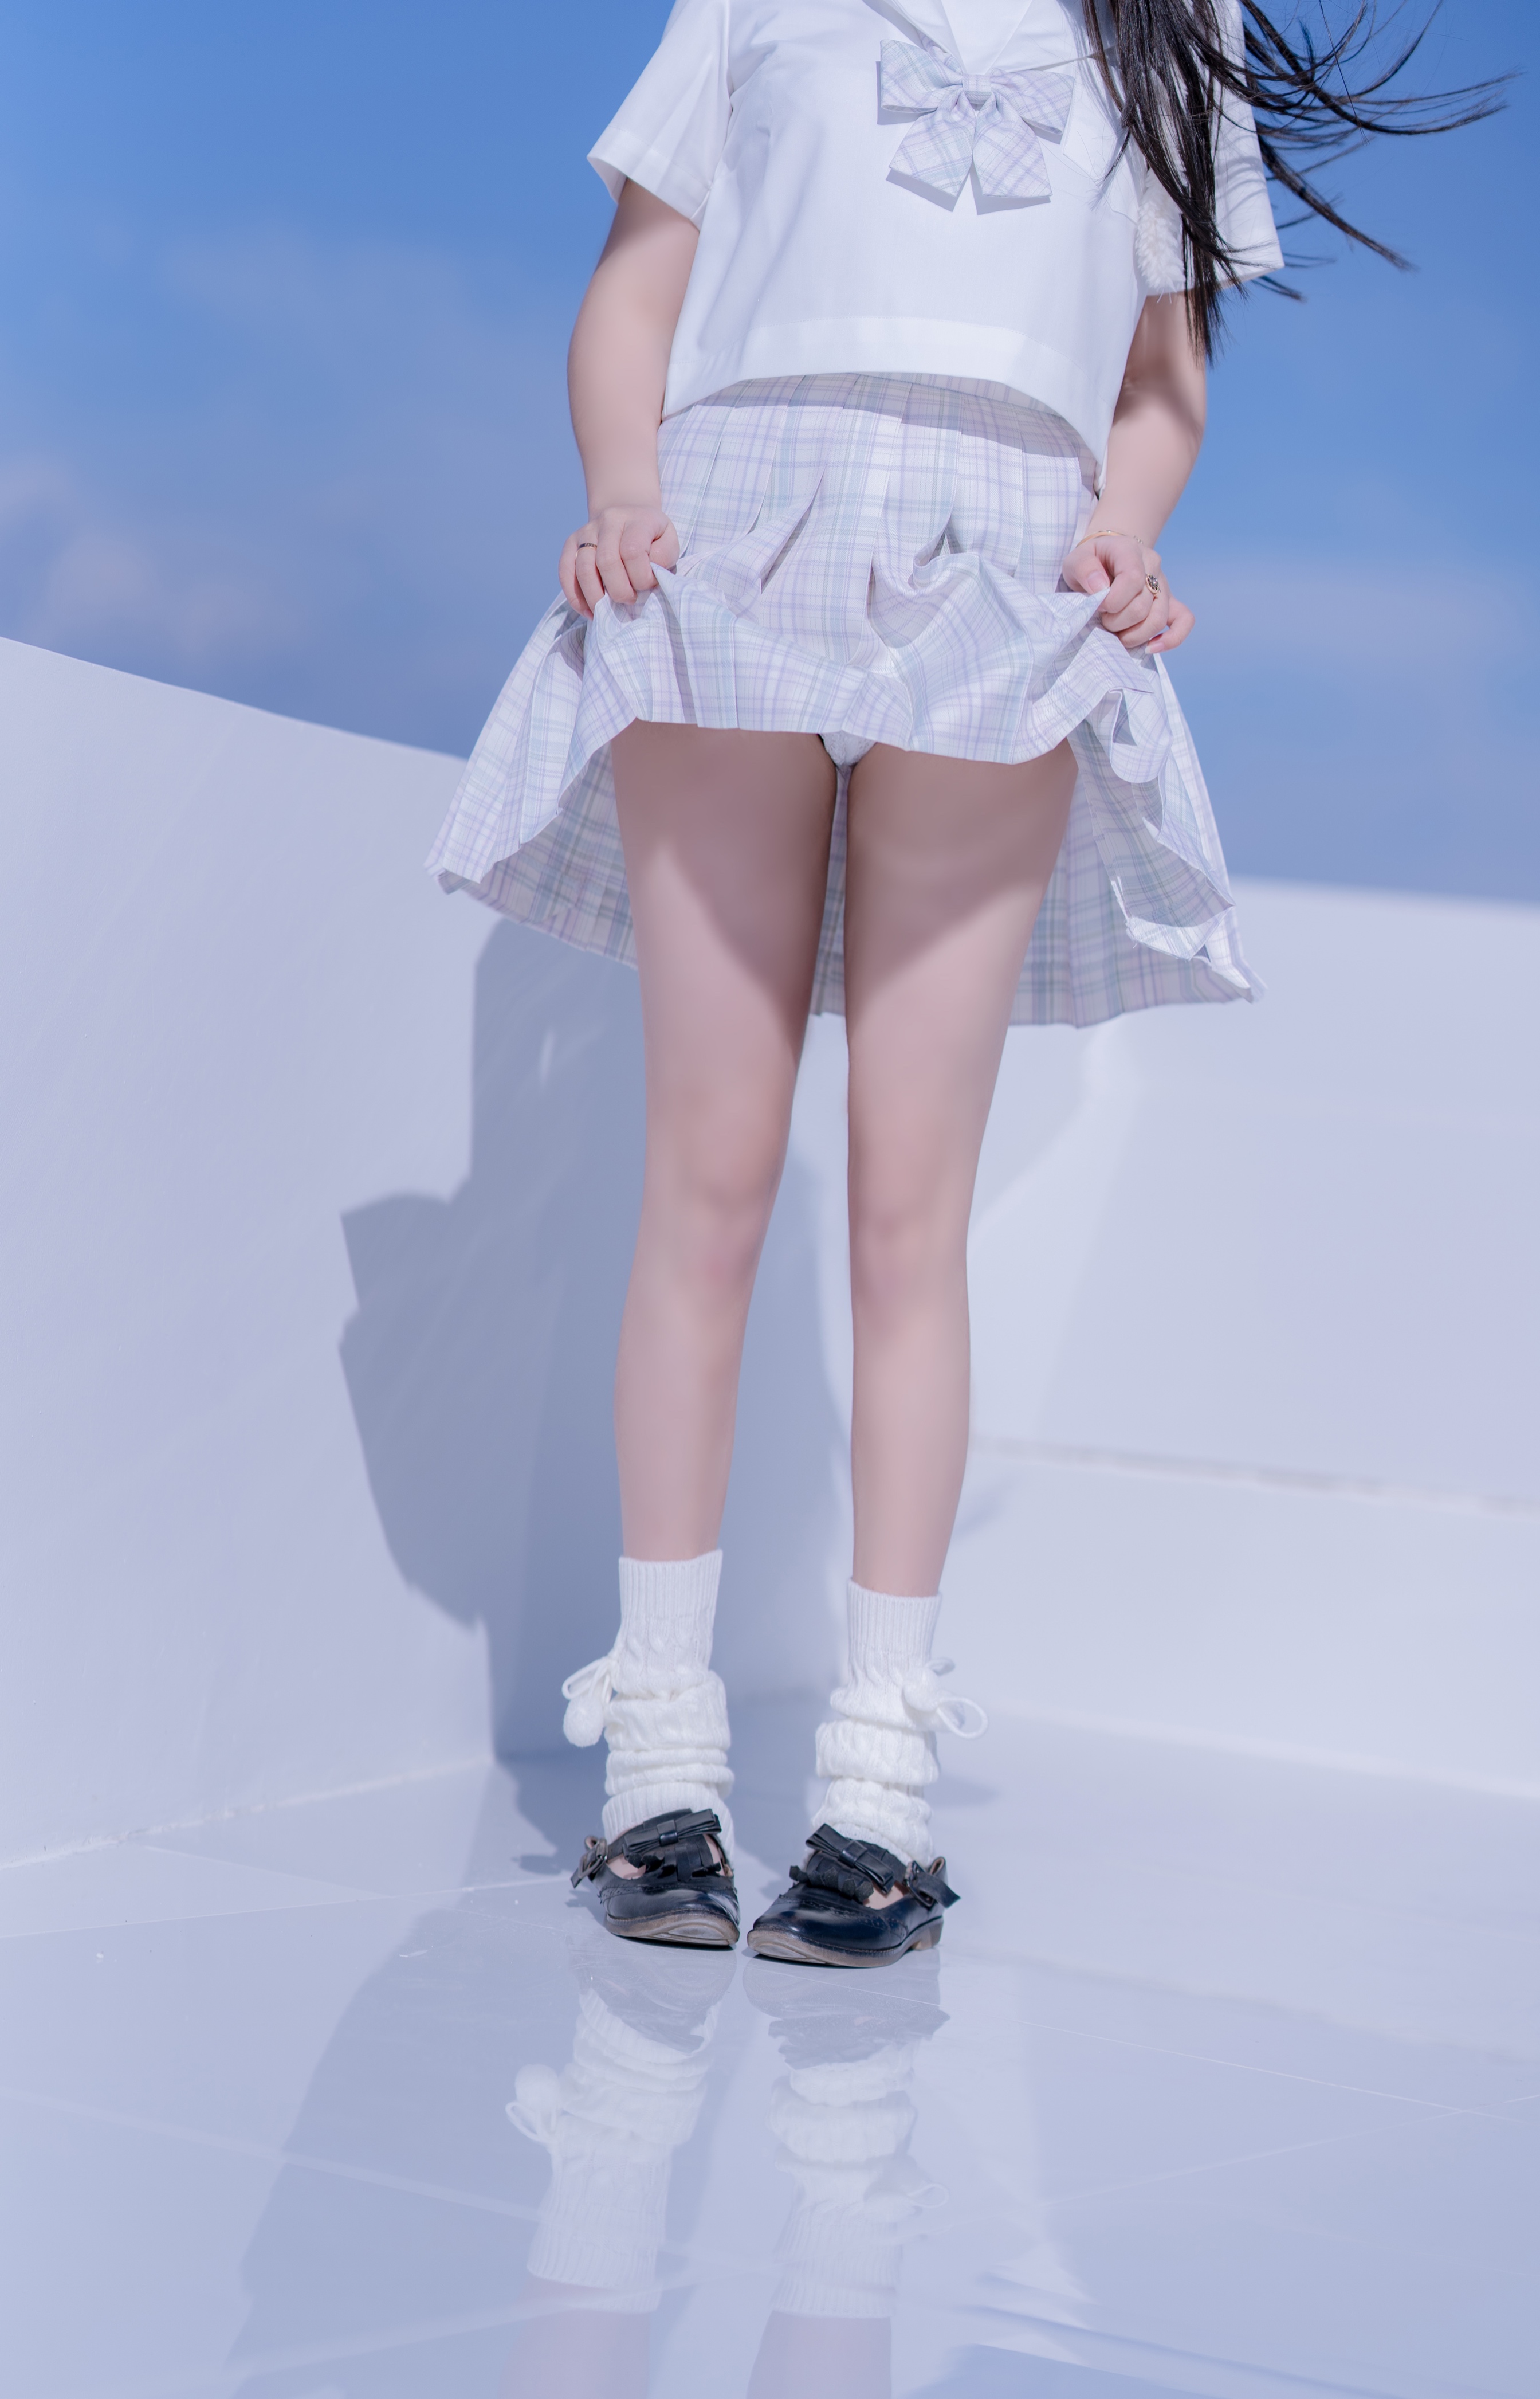 Asian Women Model Lifting Skirt Women Outdoors Standing Legs Flashing Panties Skirt 2684